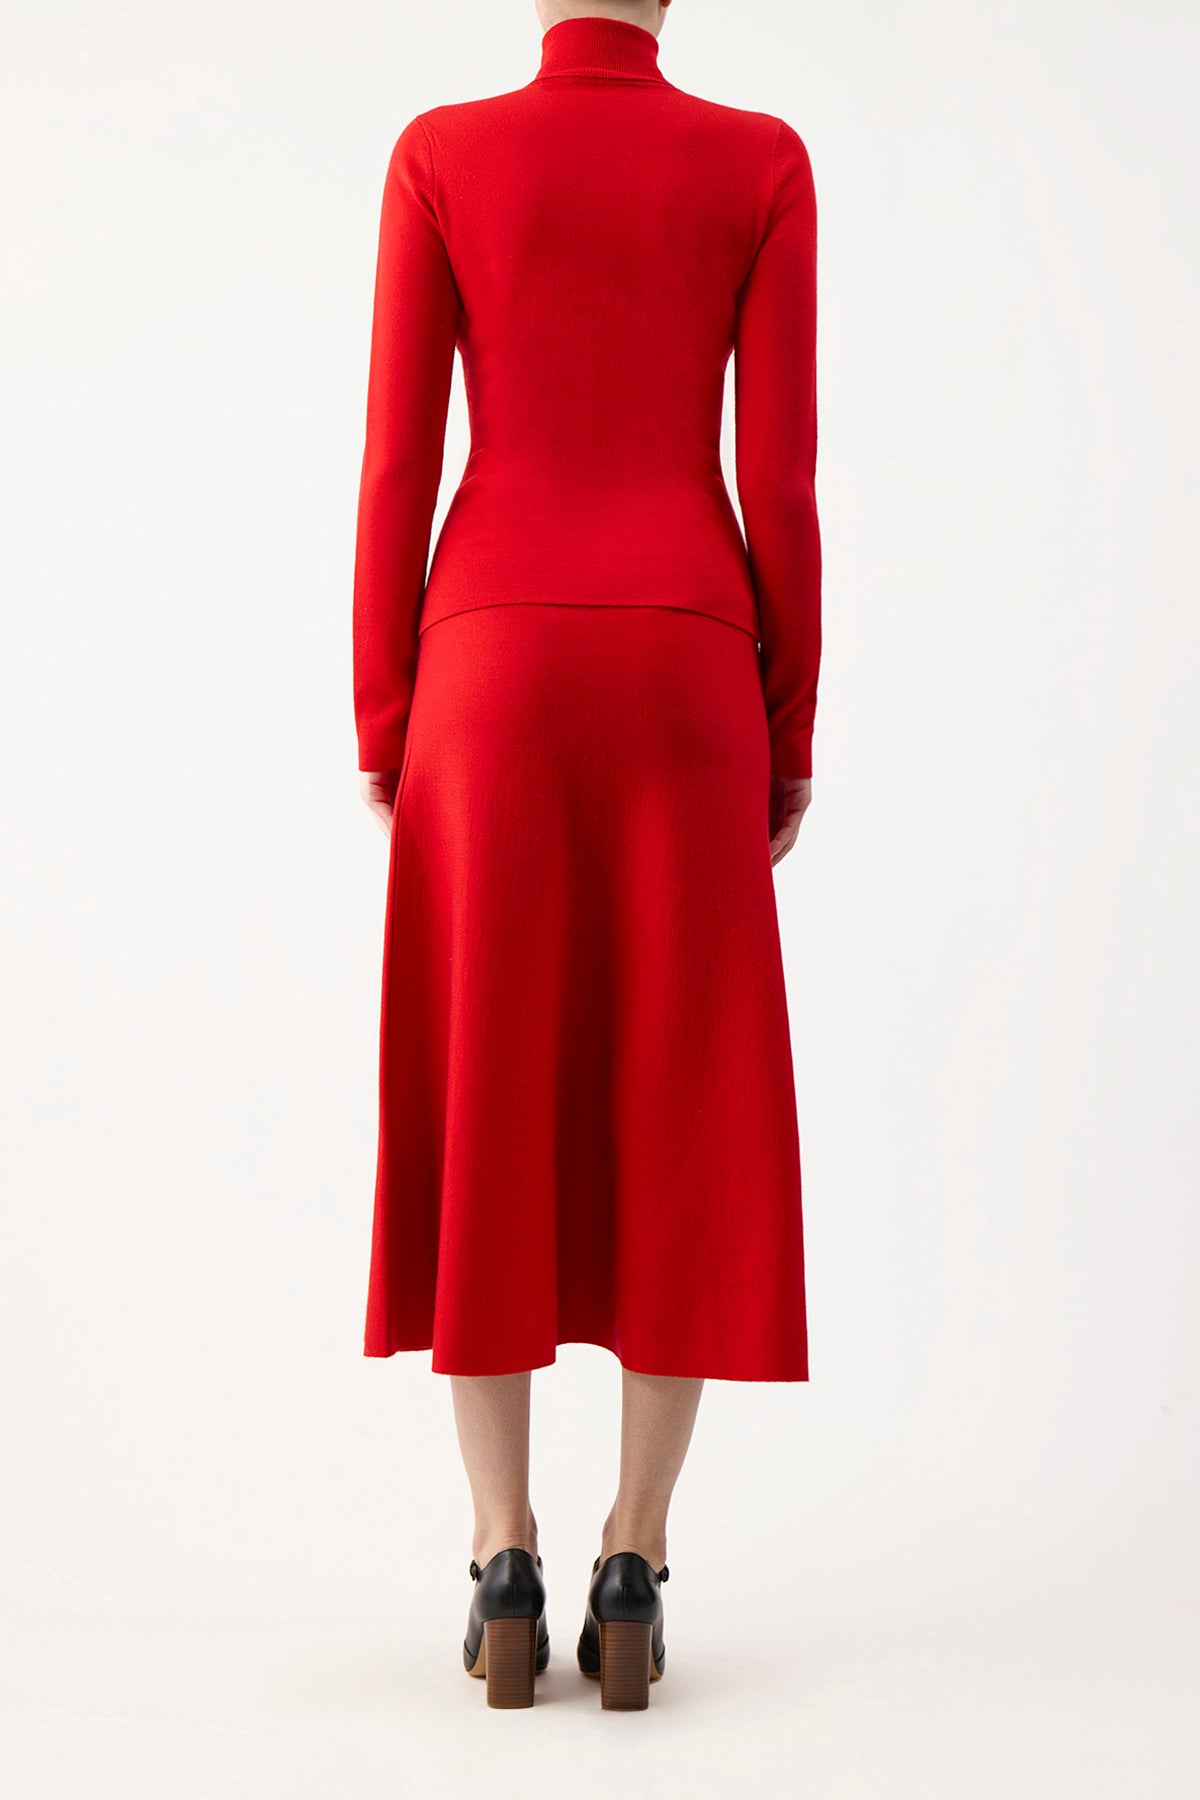 Freddie Knit Skirt in Red Topaz Cashmere Wool